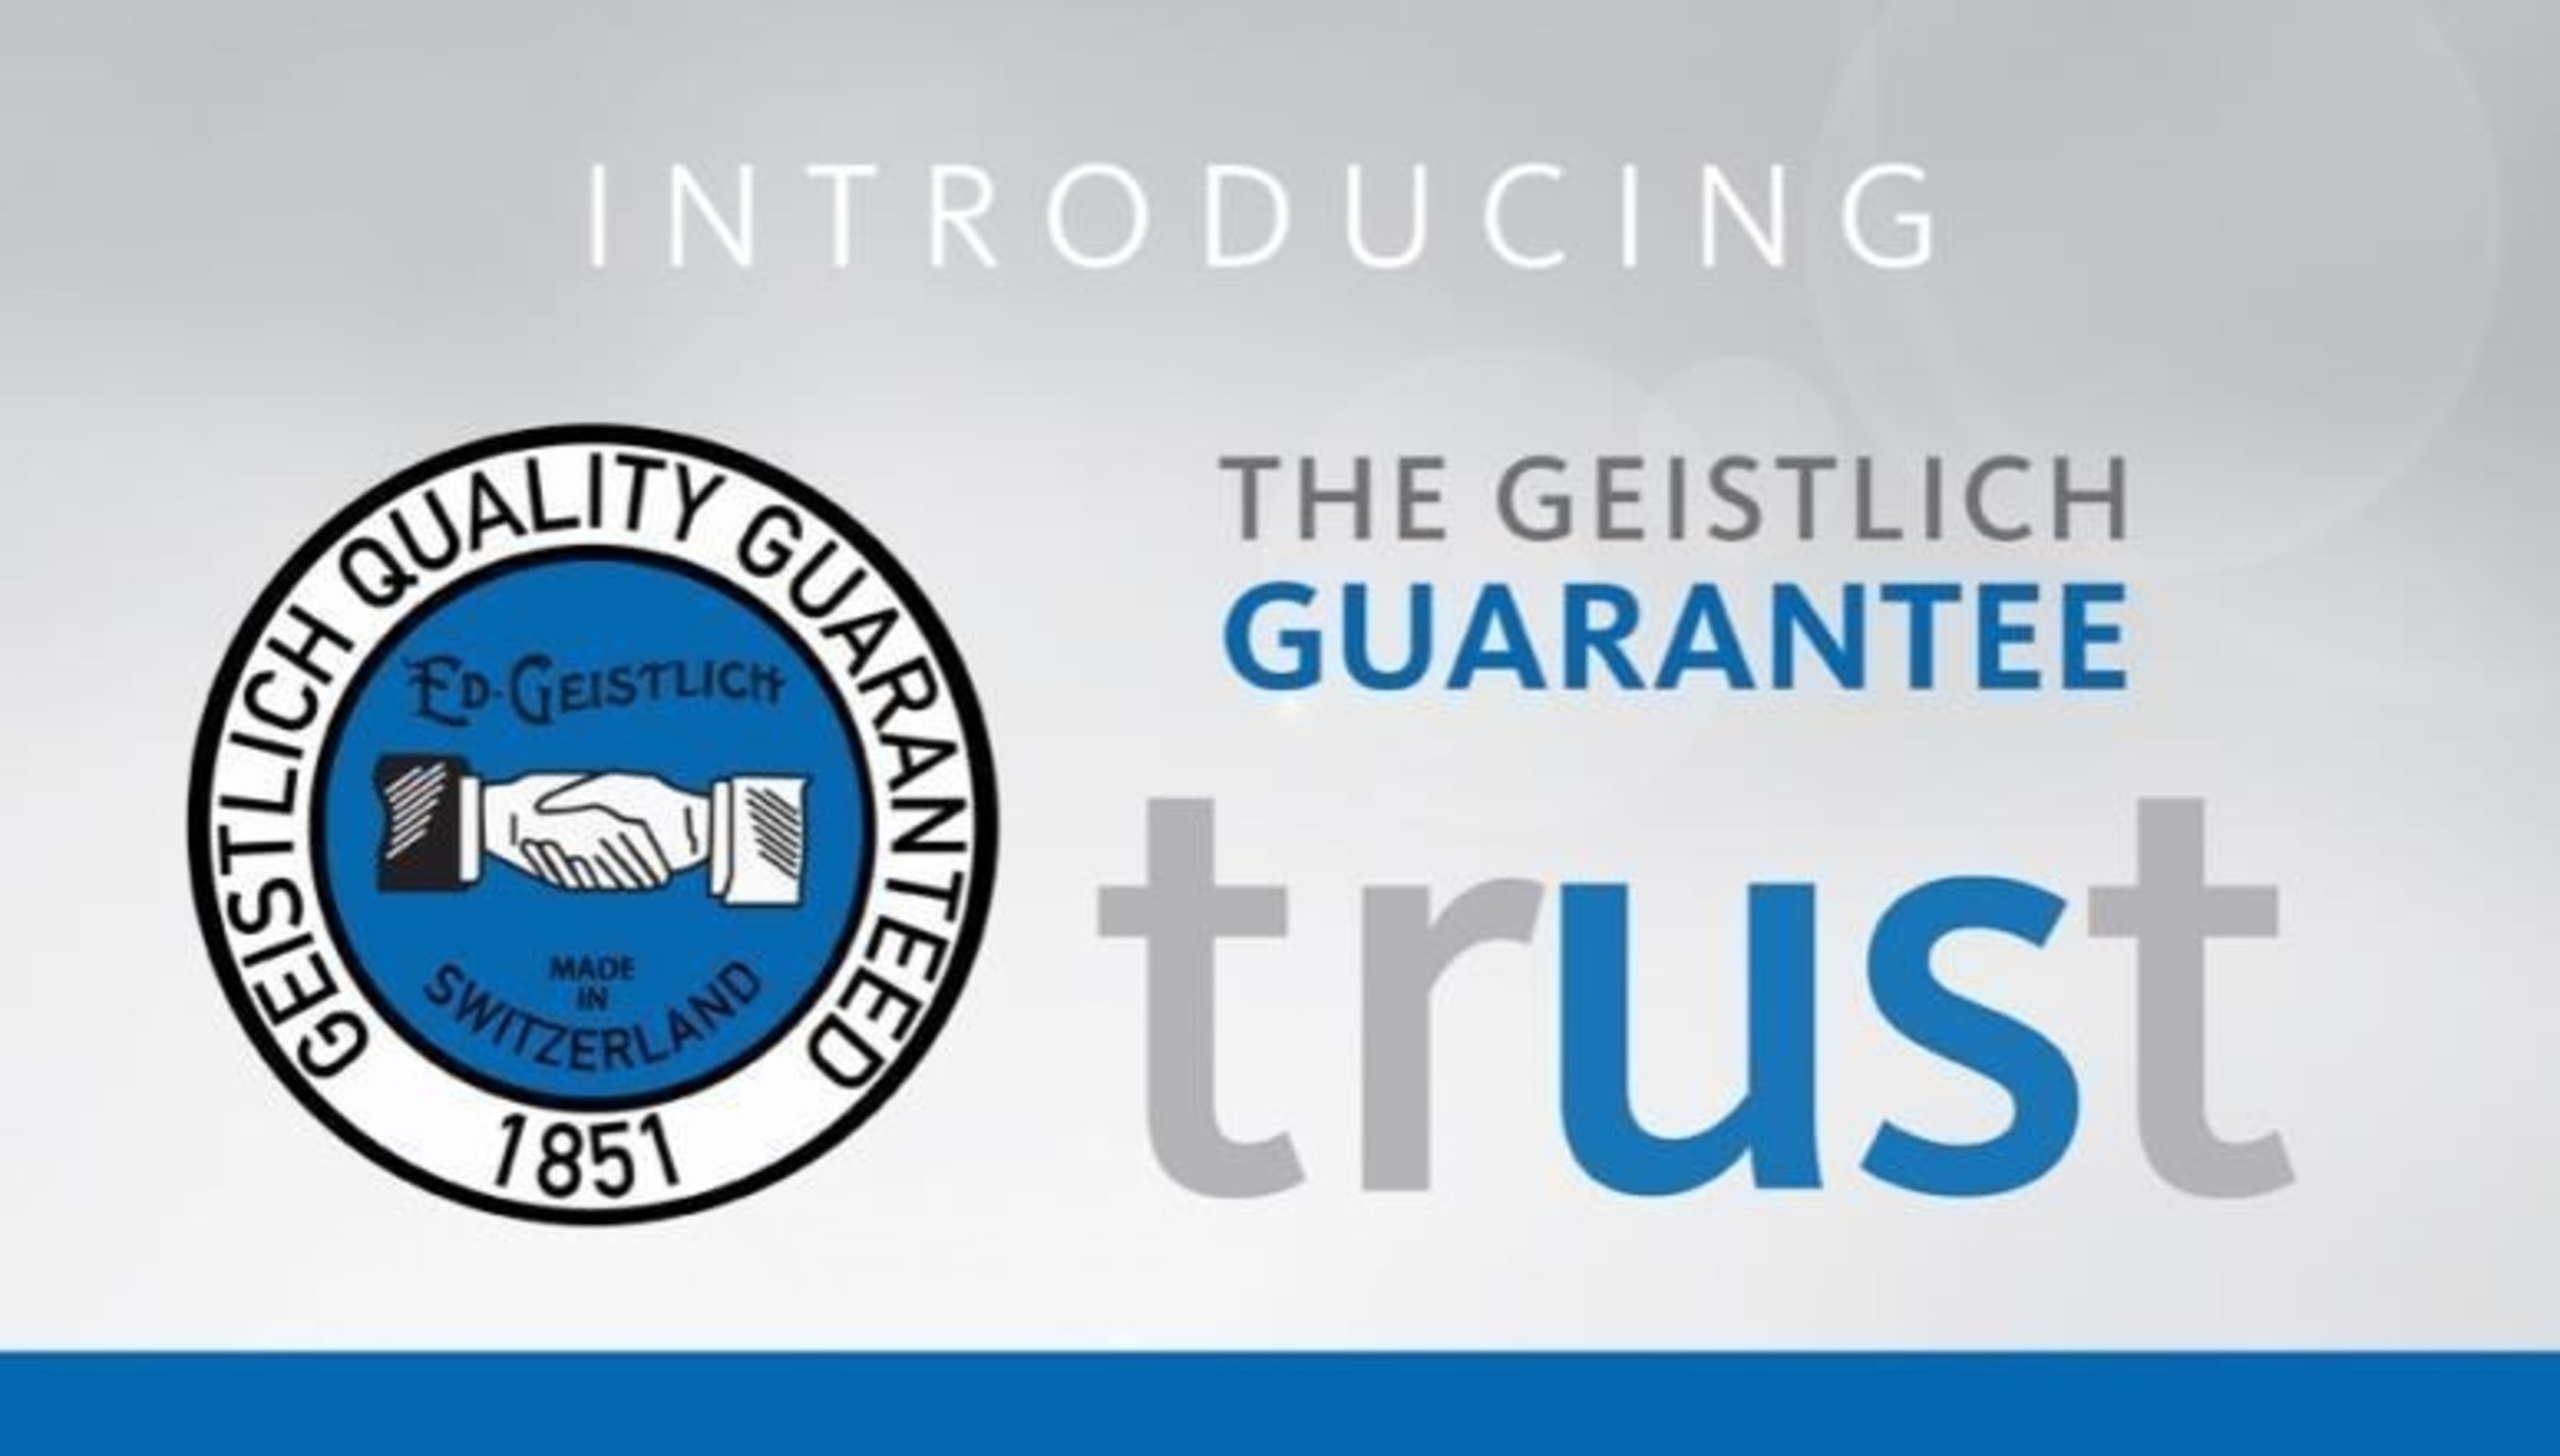 Introducing The Geistlich Guarantee